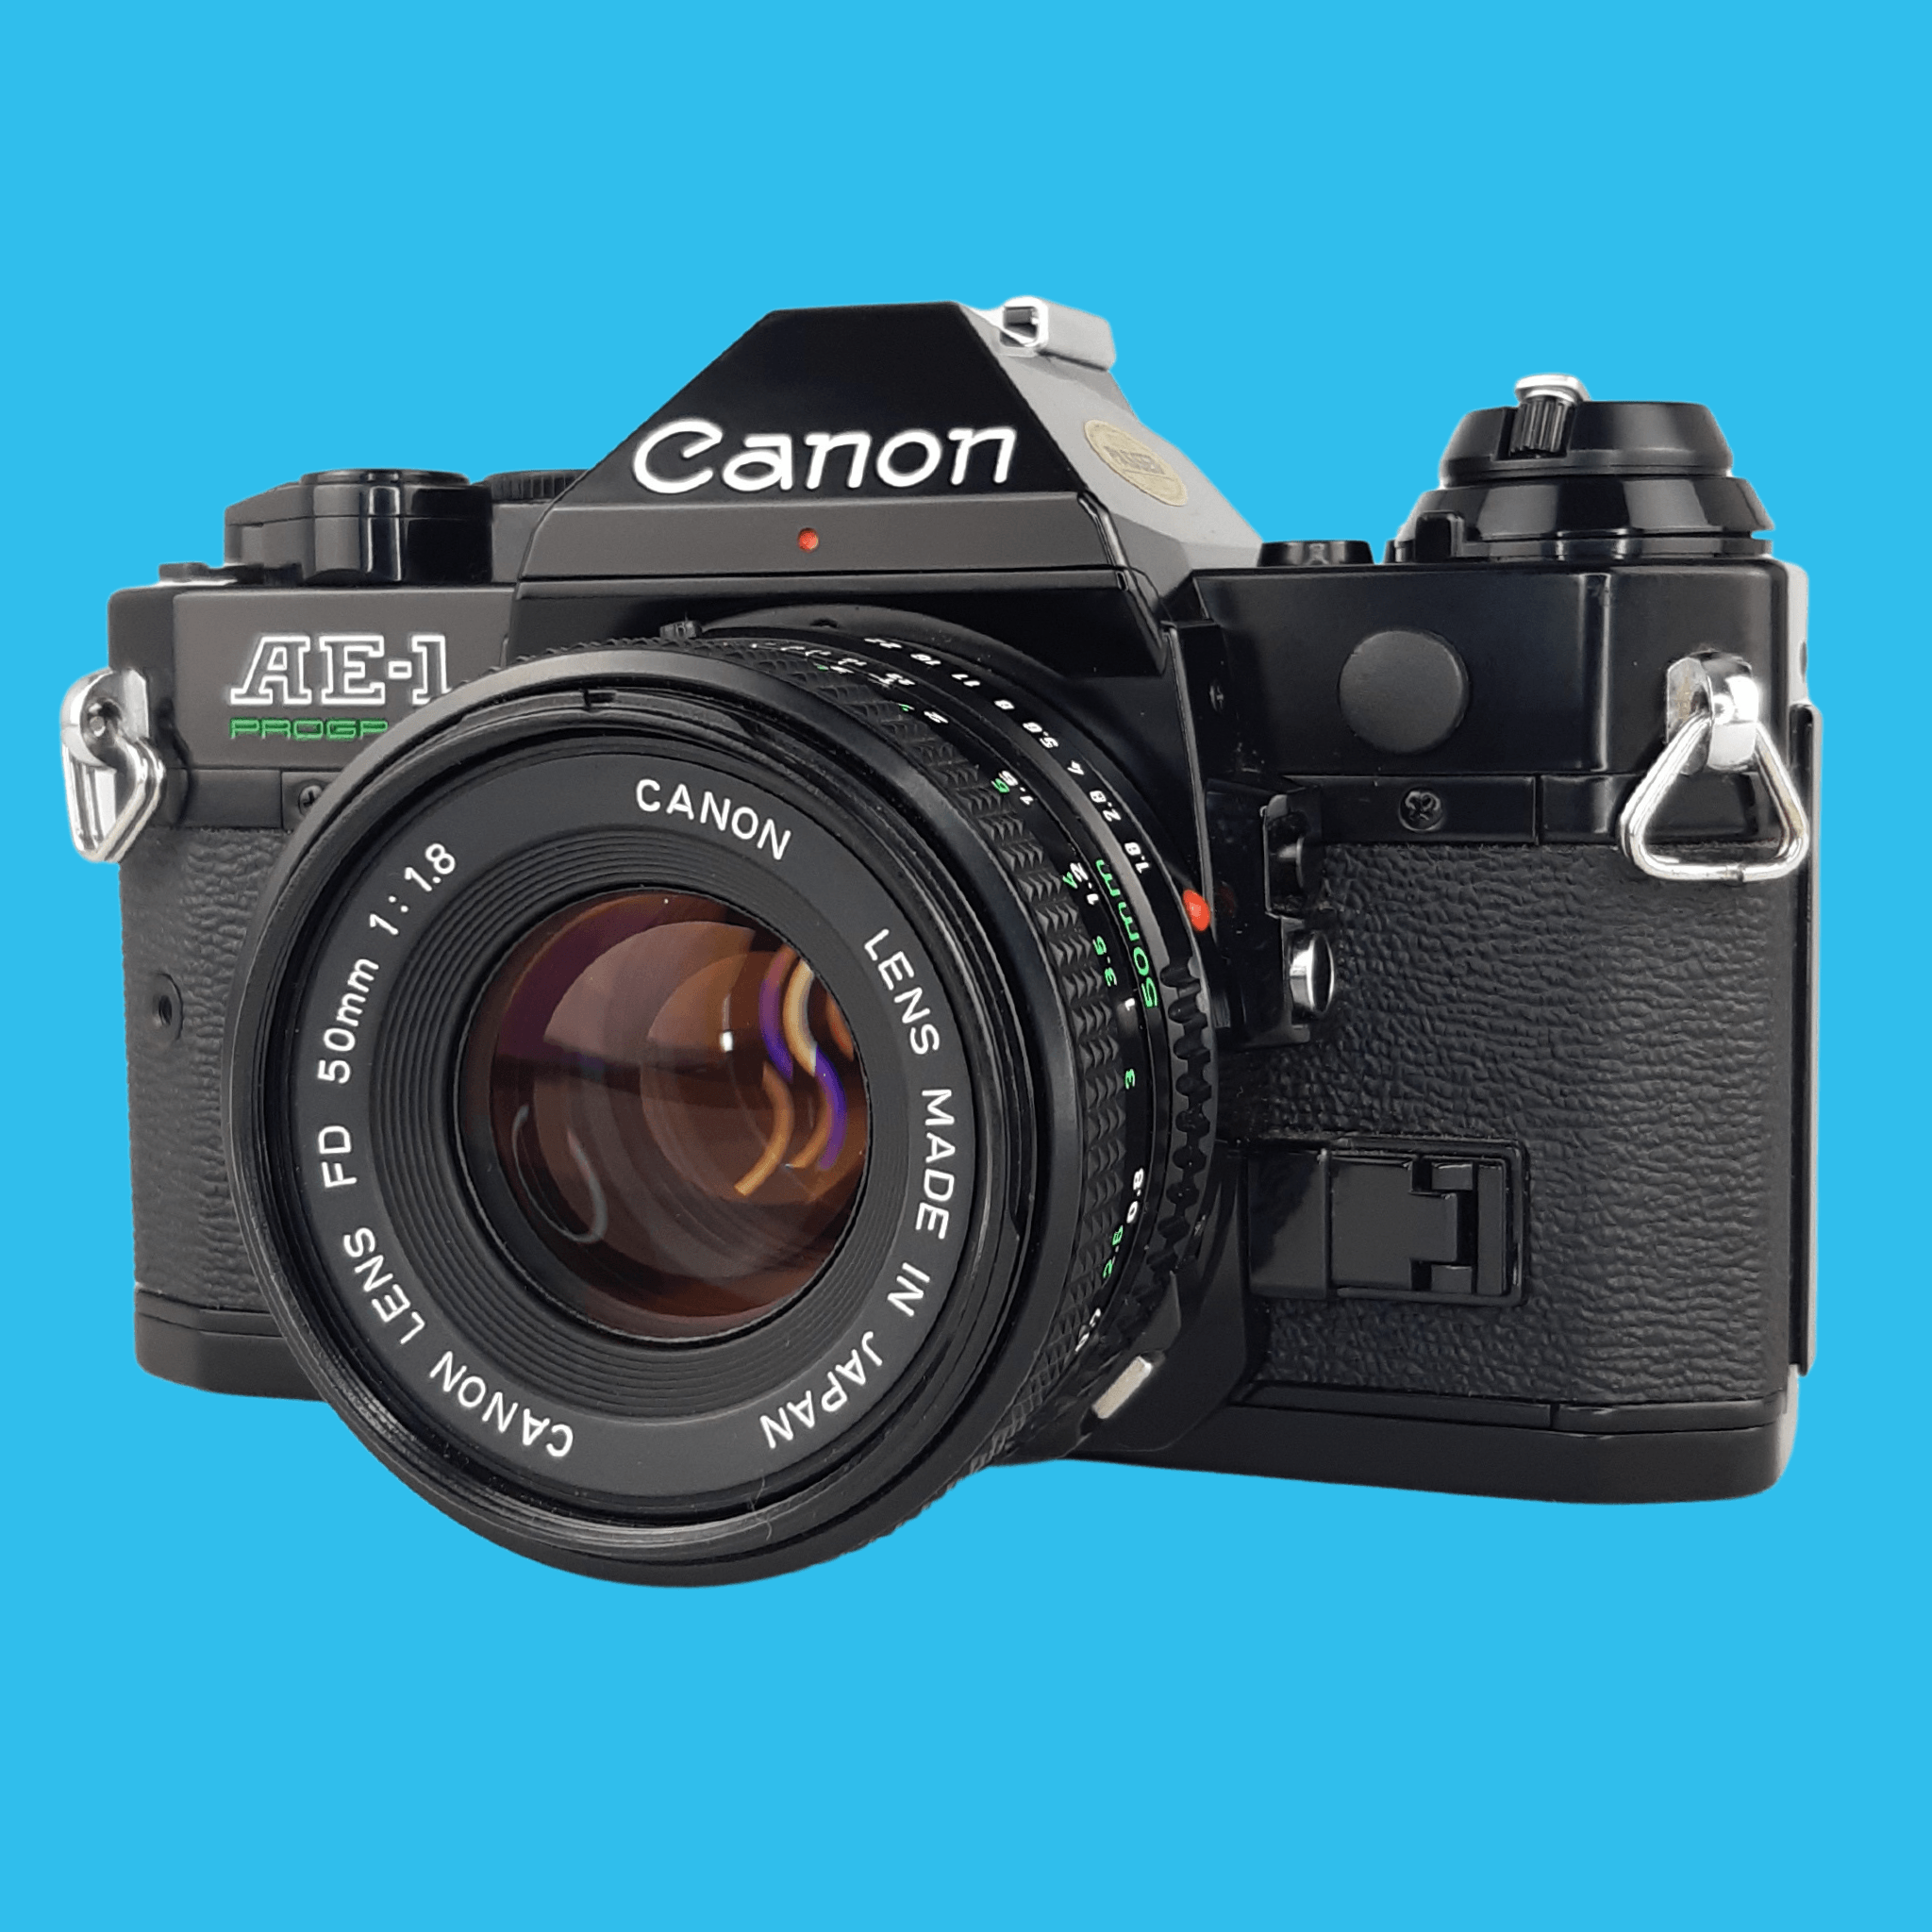 Canon AE -1 program キャノン AE-1 プログラム - ビデオカメラ